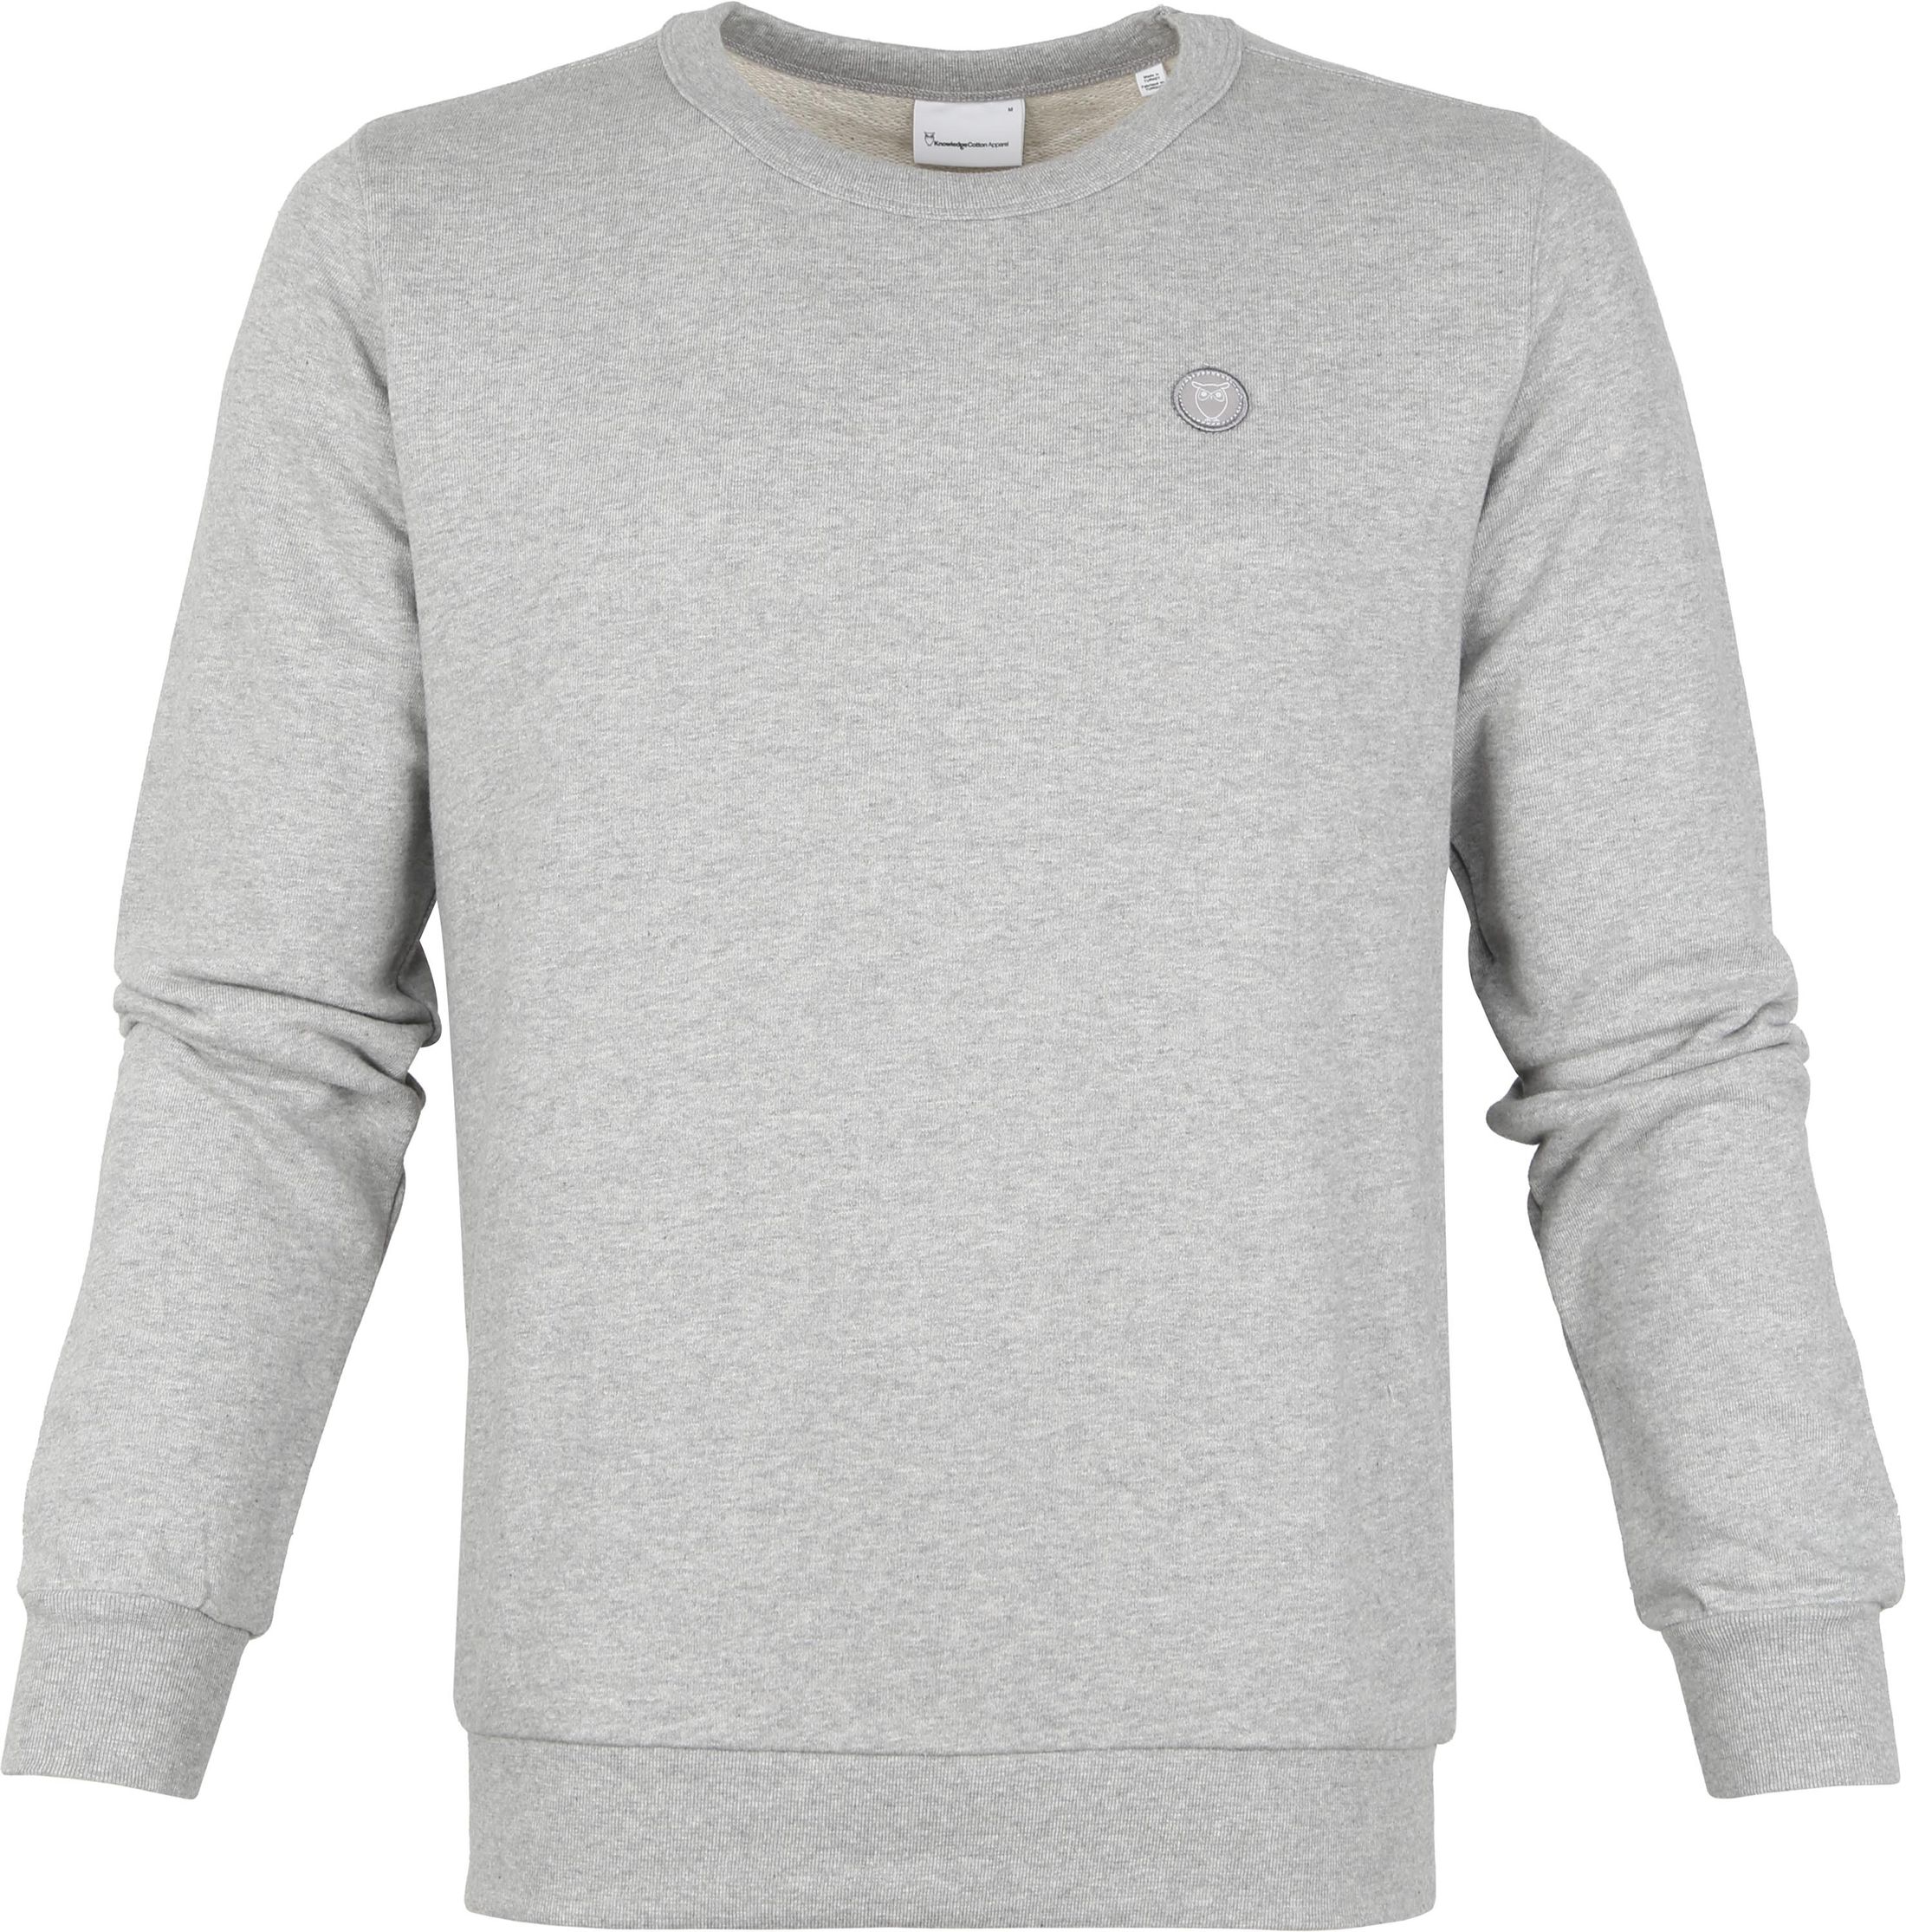 KnowledgeCotton Apparel Elm Melange Sweater Grey size L